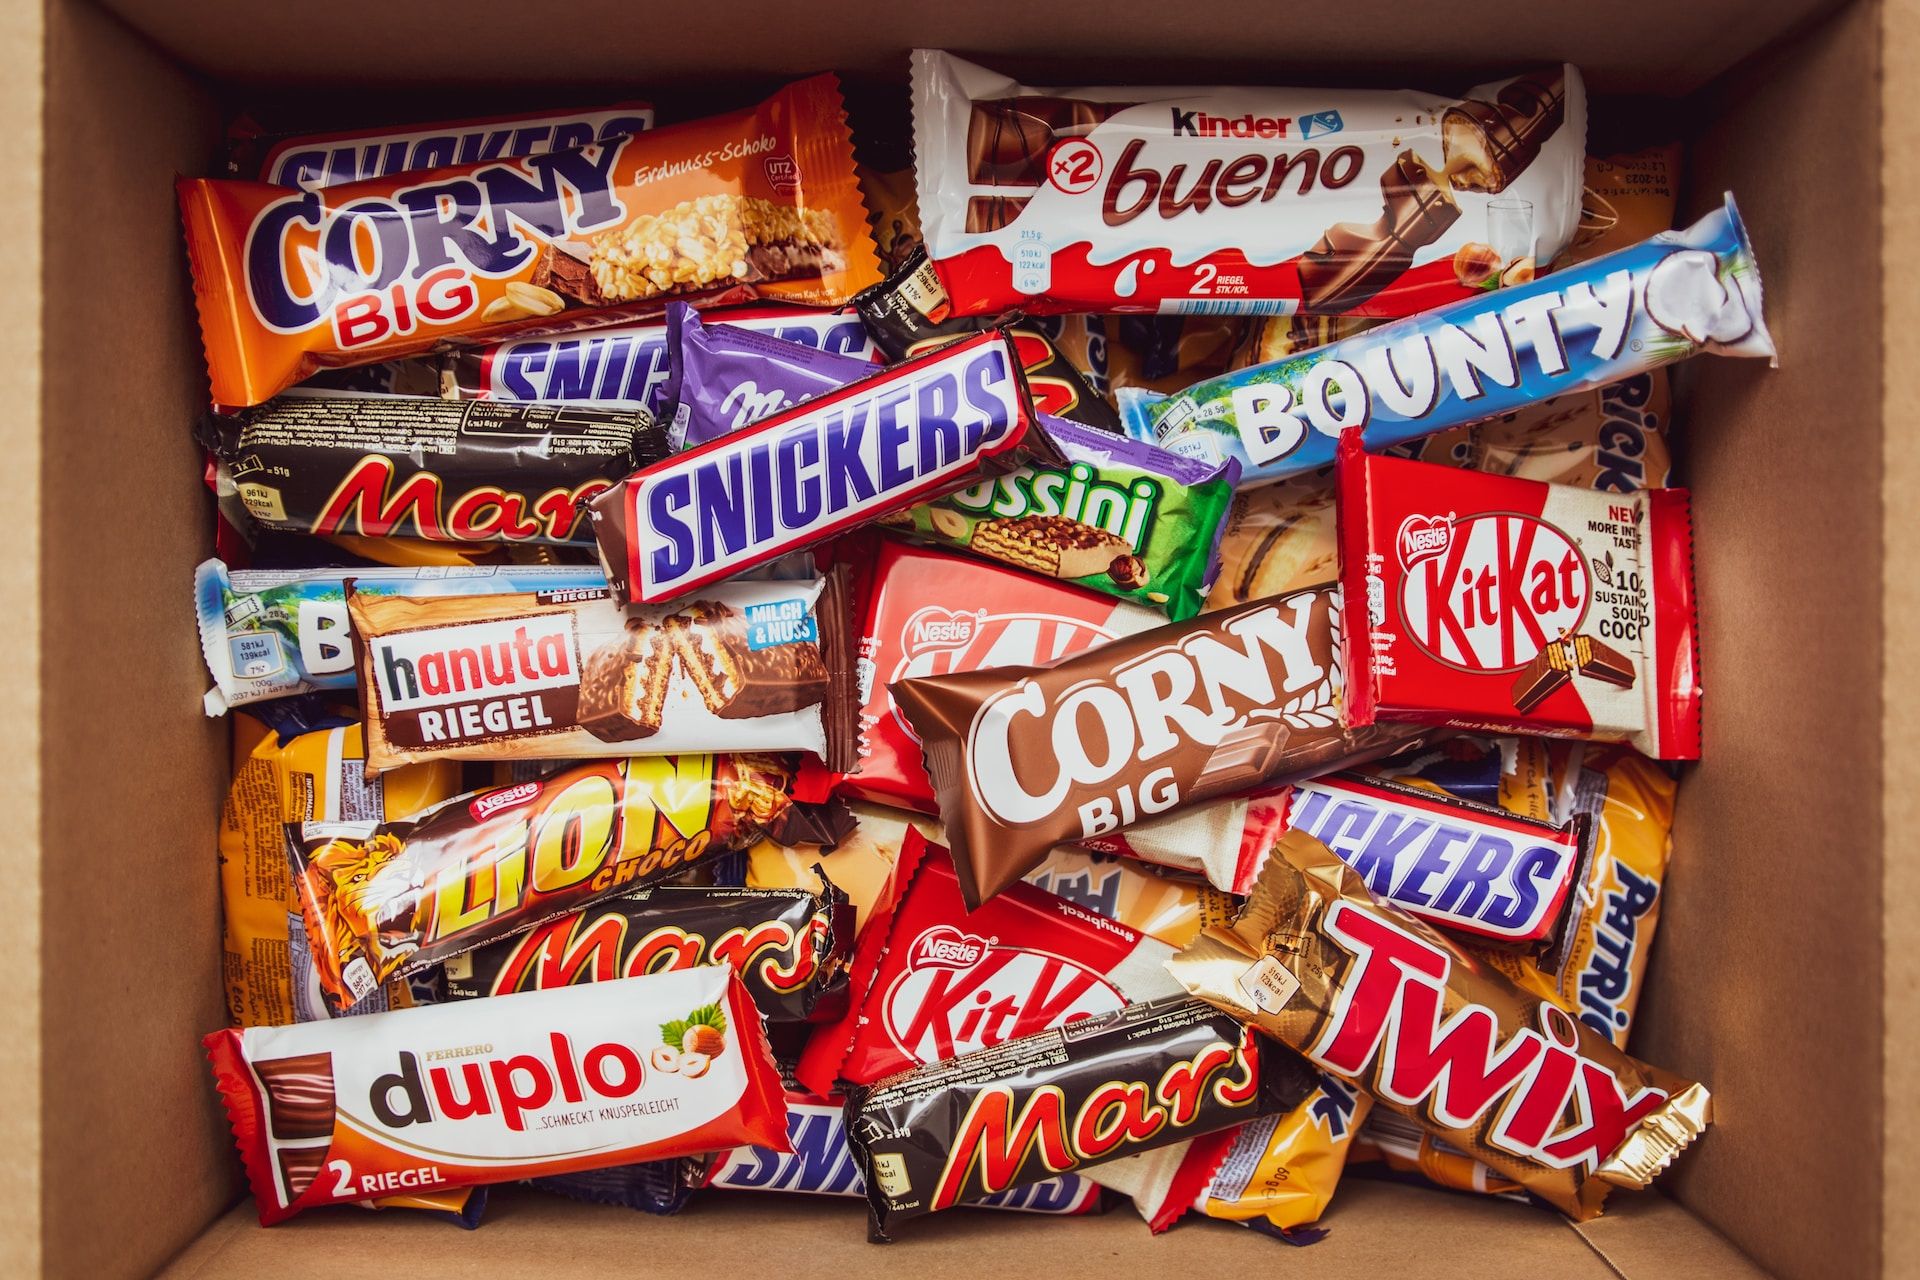 A box of chocolate bars